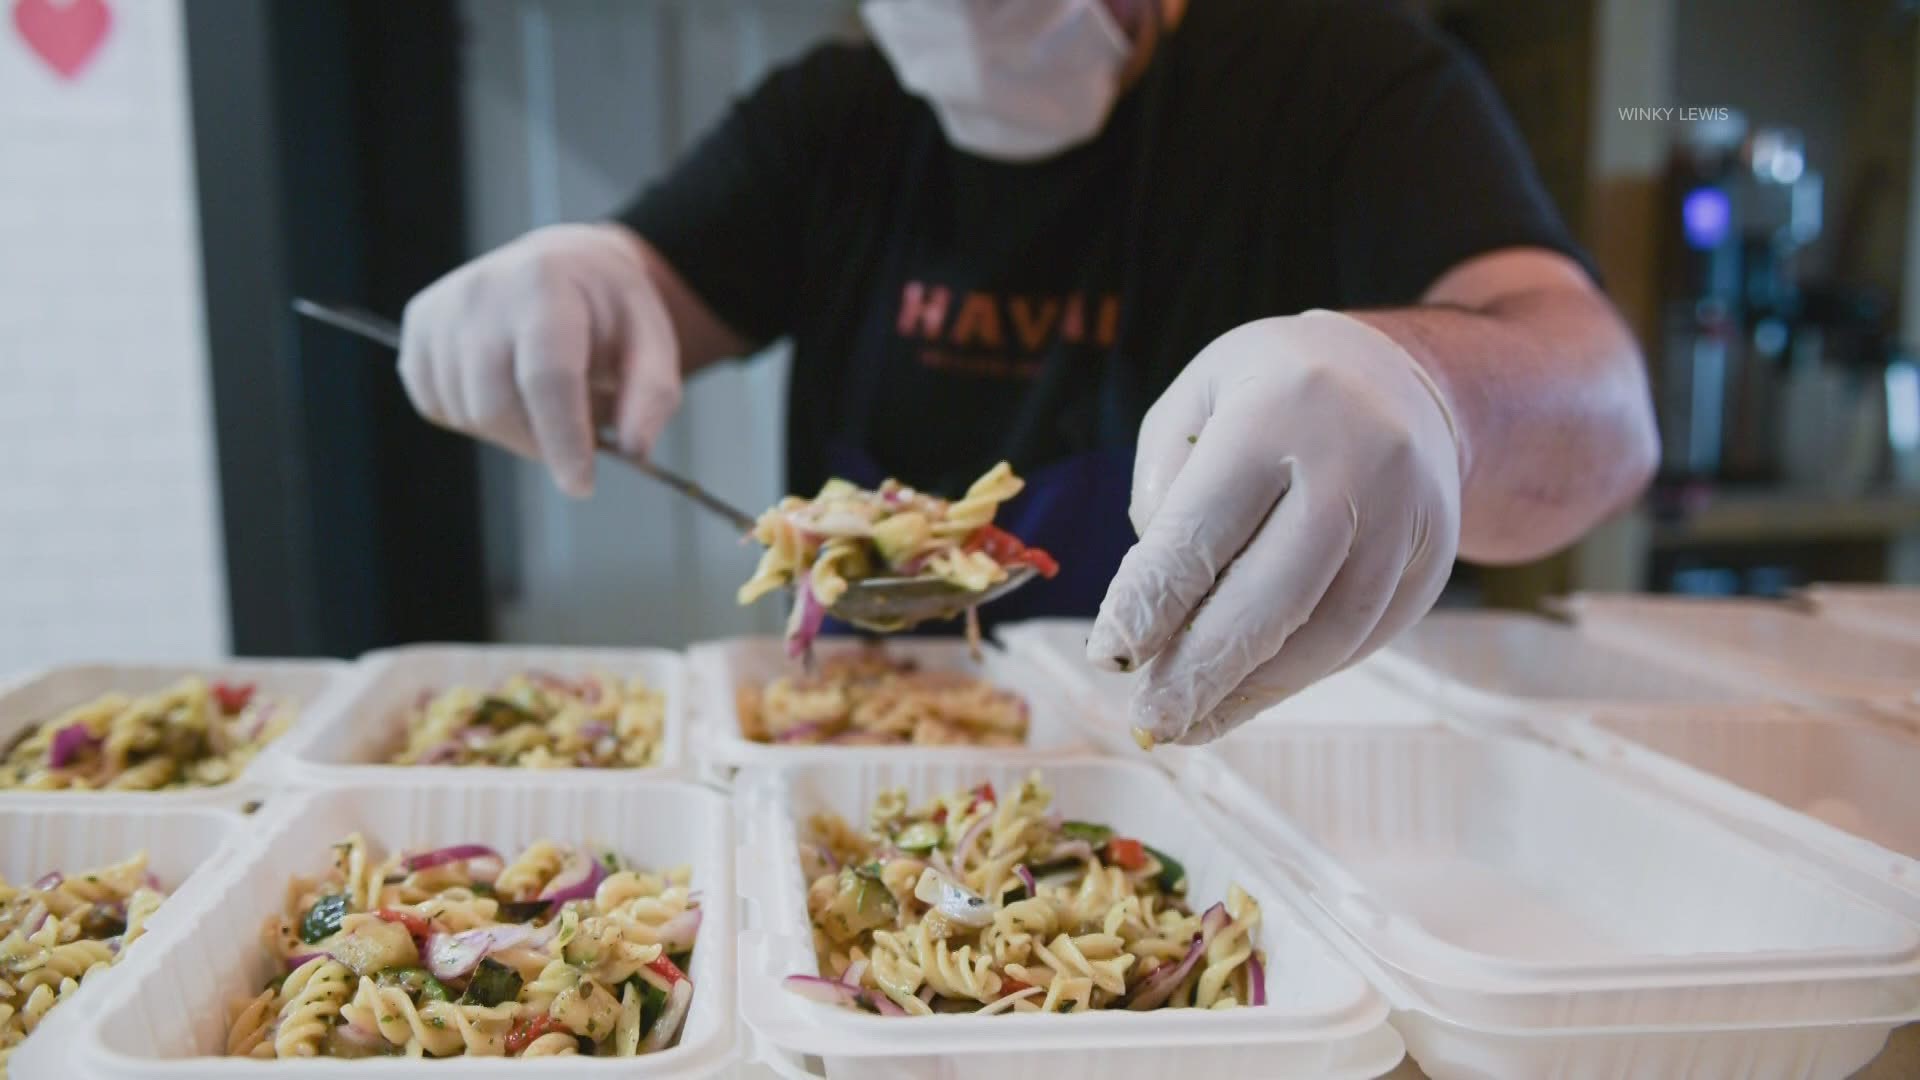 New program feeds people in need and keeps restaurants afloat during coronavirus